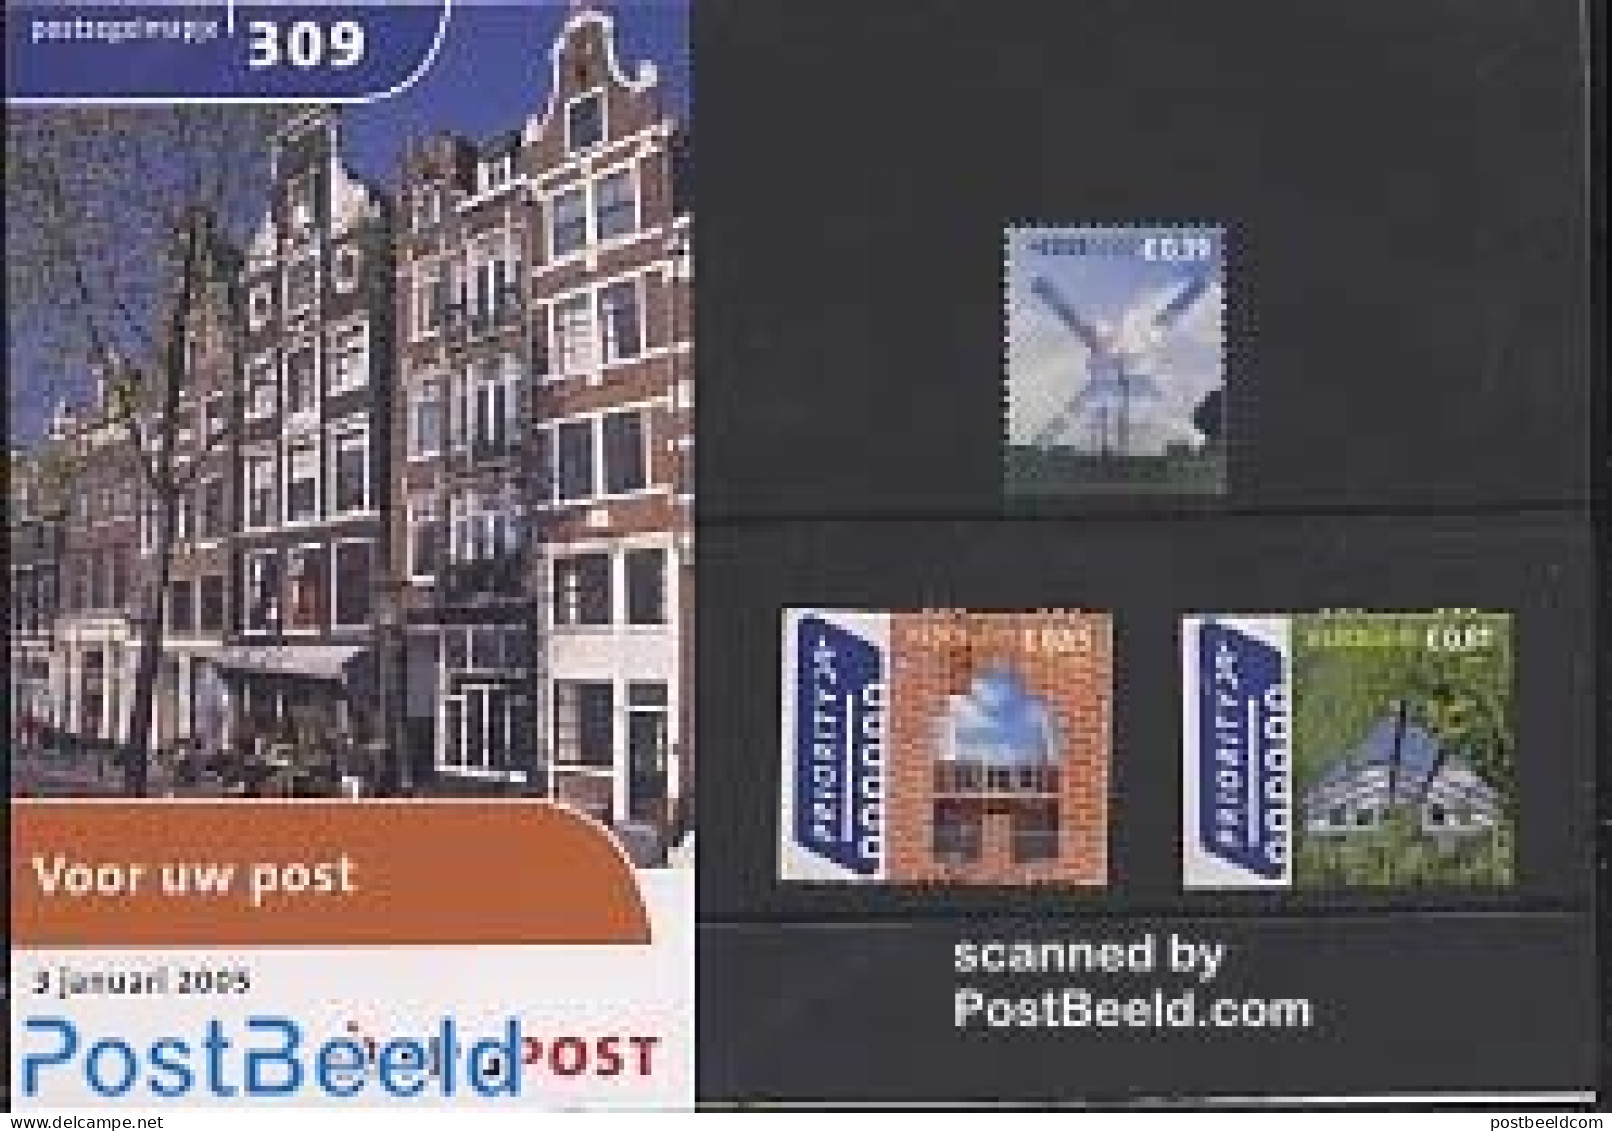 Netherlands 2005 Dutch Views, Presentation Pack 309, Mint NH, Various - Mills (Wind & Water) - Unused Stamps